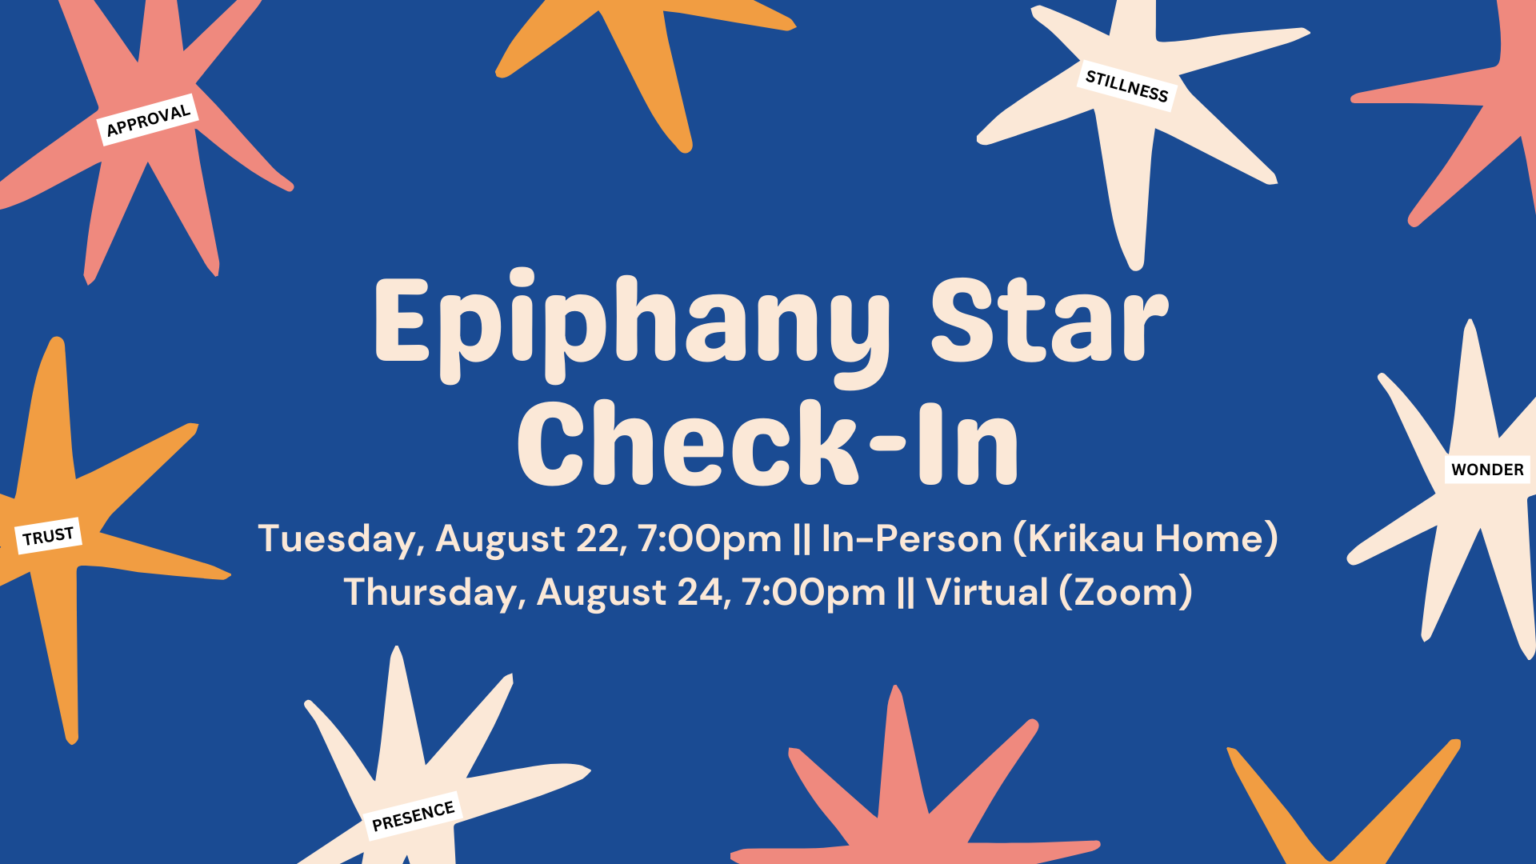 epiphany-star-check-in-in-person-towson-presbyterian-church